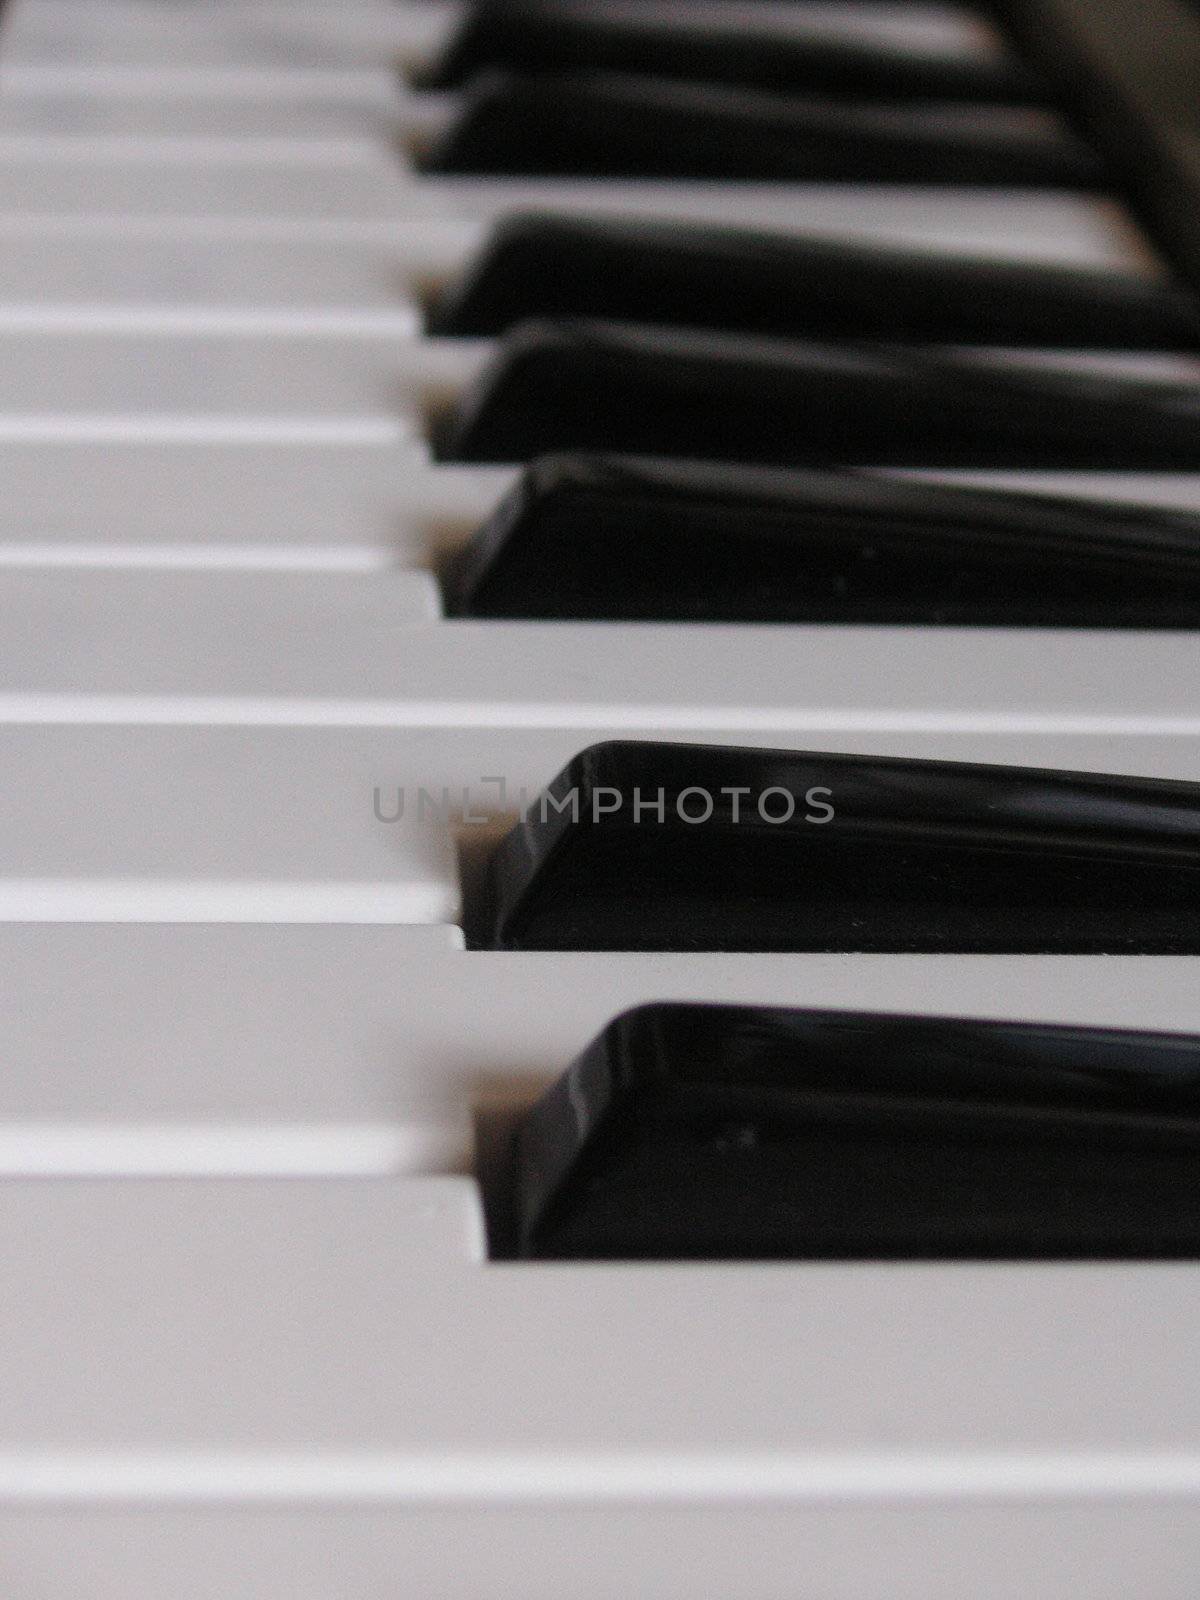 keys taken closeup of a keyboard synthesizer